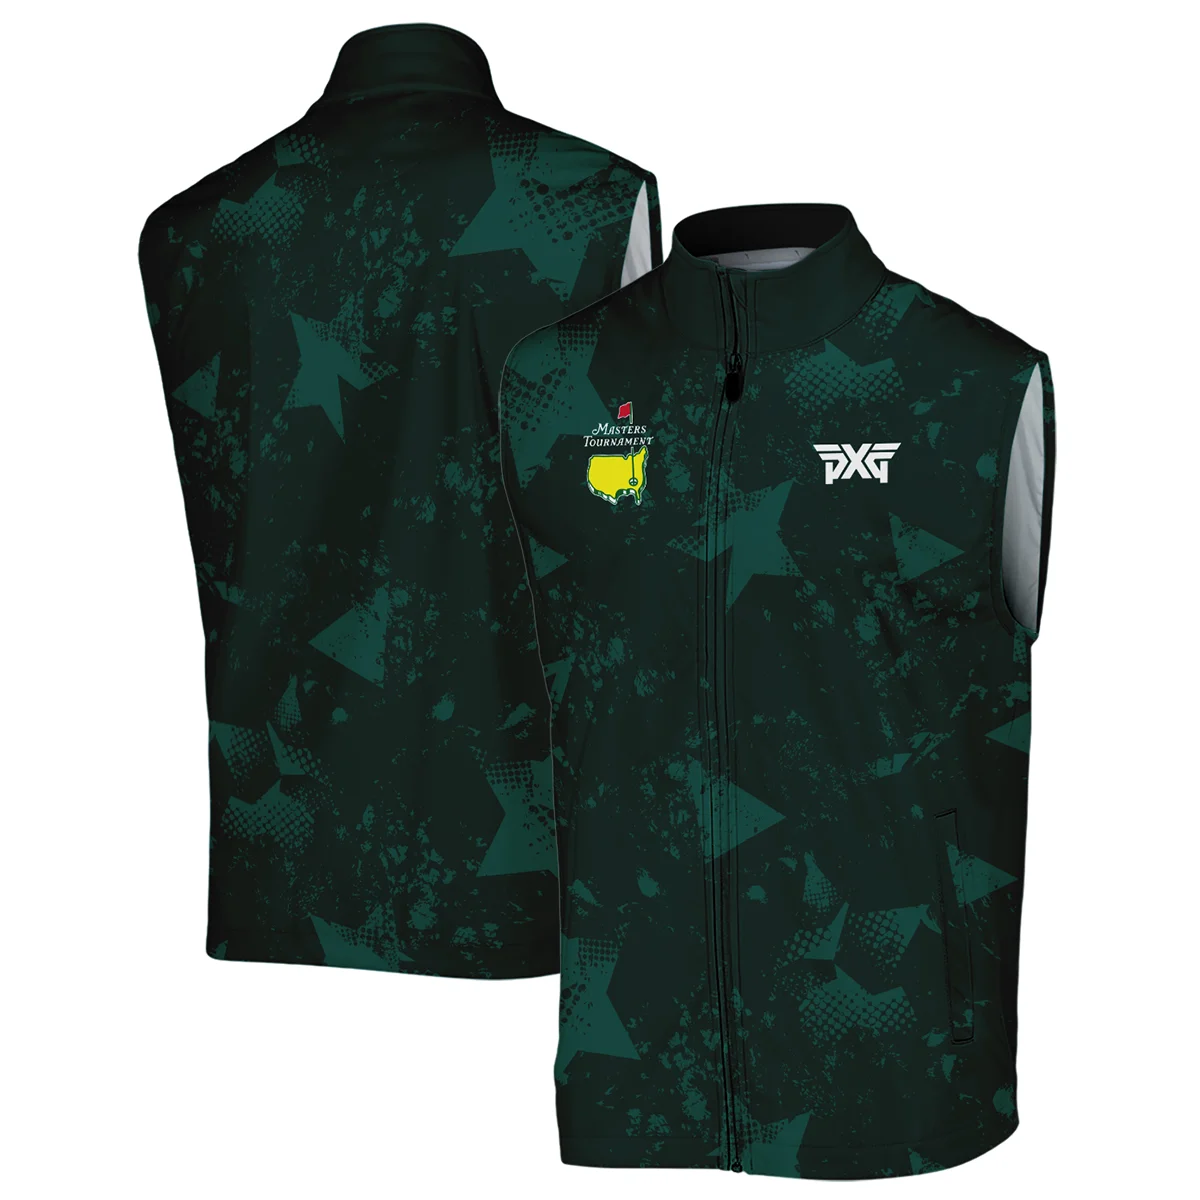 Dark Green Grunge Stars Pattern Golf Masters Tournament Bomber Jacket Style Classic Bomber Jacket